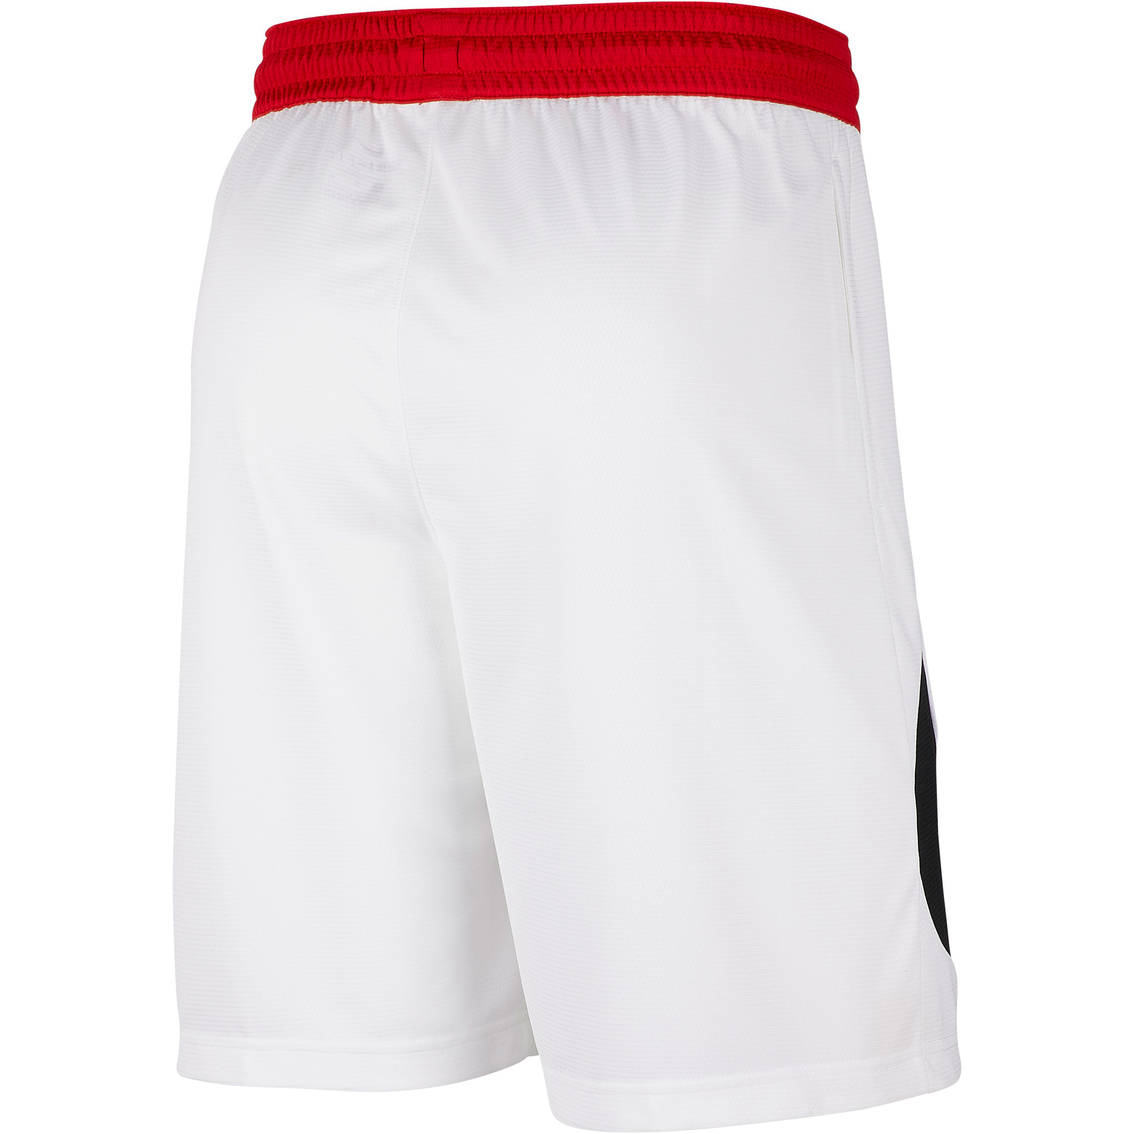 Nike Dri-fit Hbr 2.0 Basketball Shorts | Shorts | Father's Day Shop ...